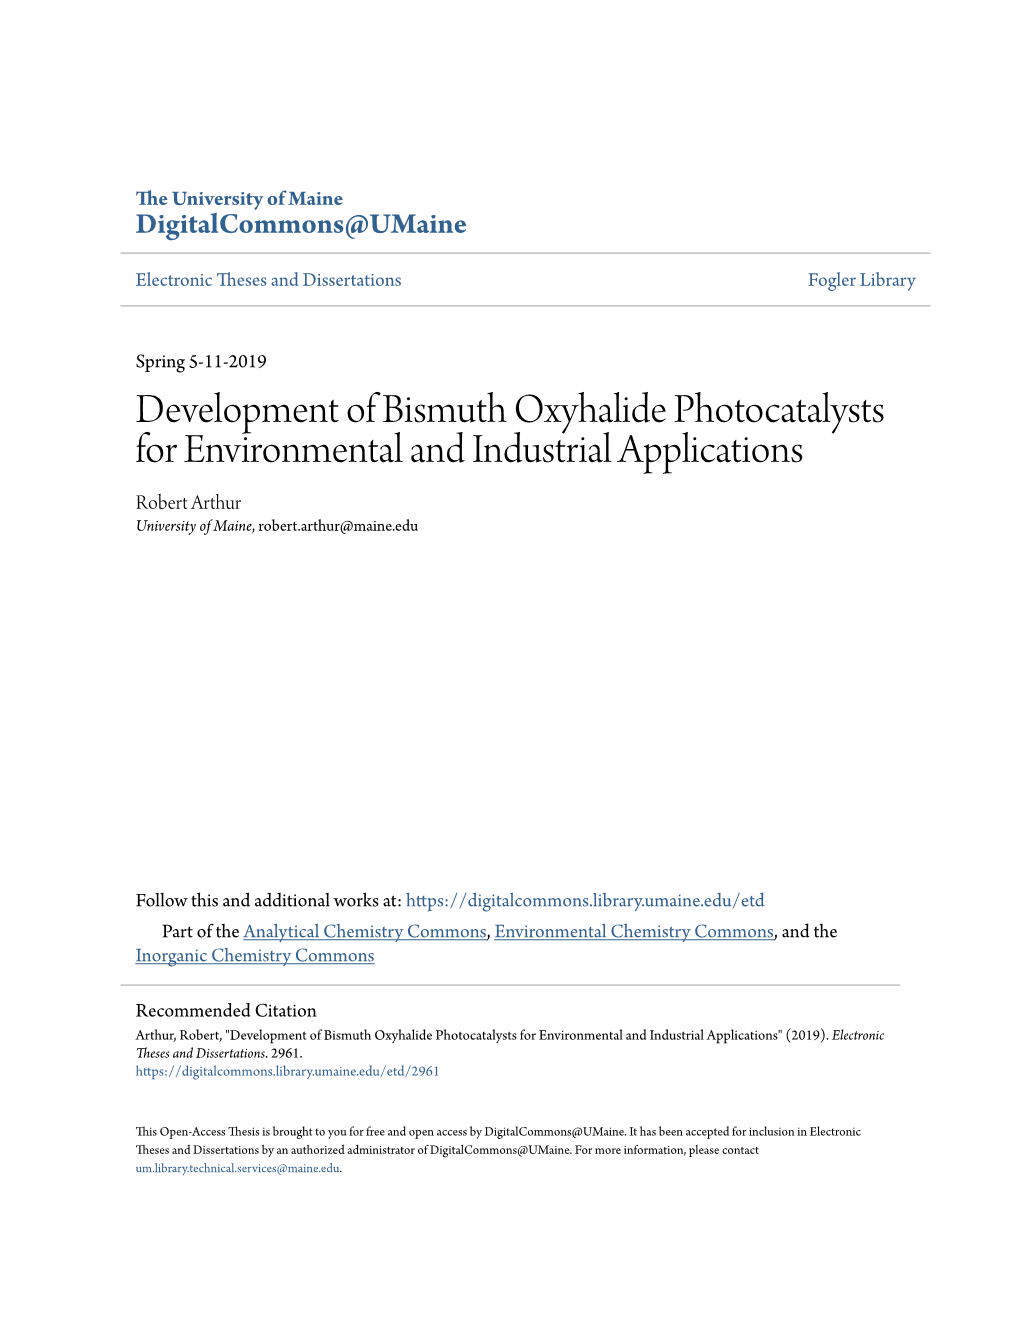 Development of Bismuth Oxyhalide Photocatalysts for Environmental and Industrial Applications Robert Arthur University of Maine, Robert.Arthur@Maine.Edu